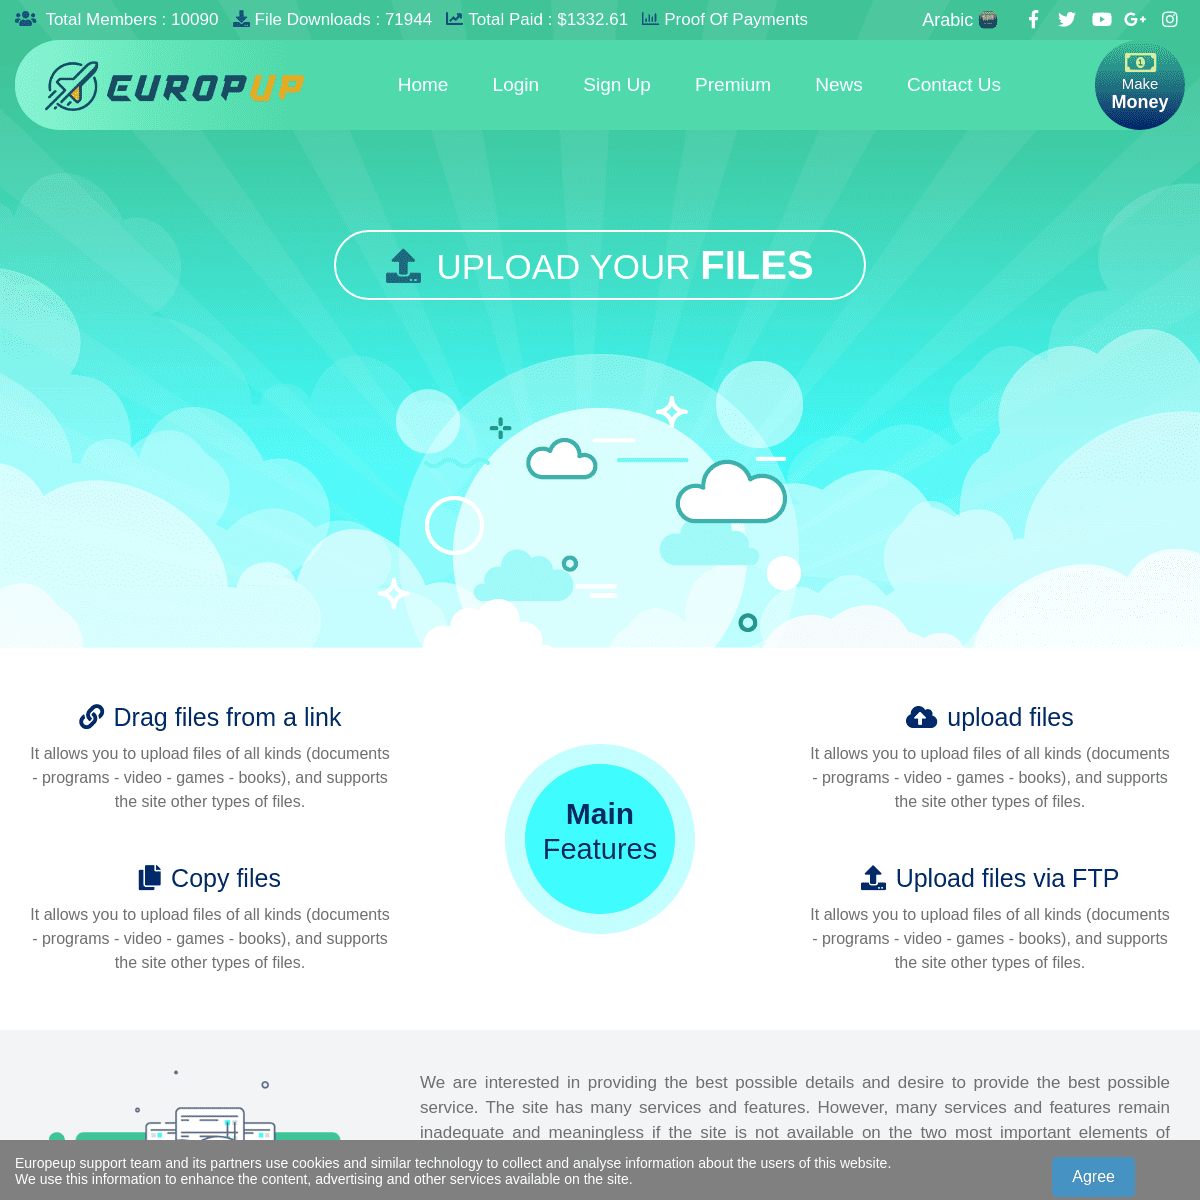 A complete backup of europeup.com